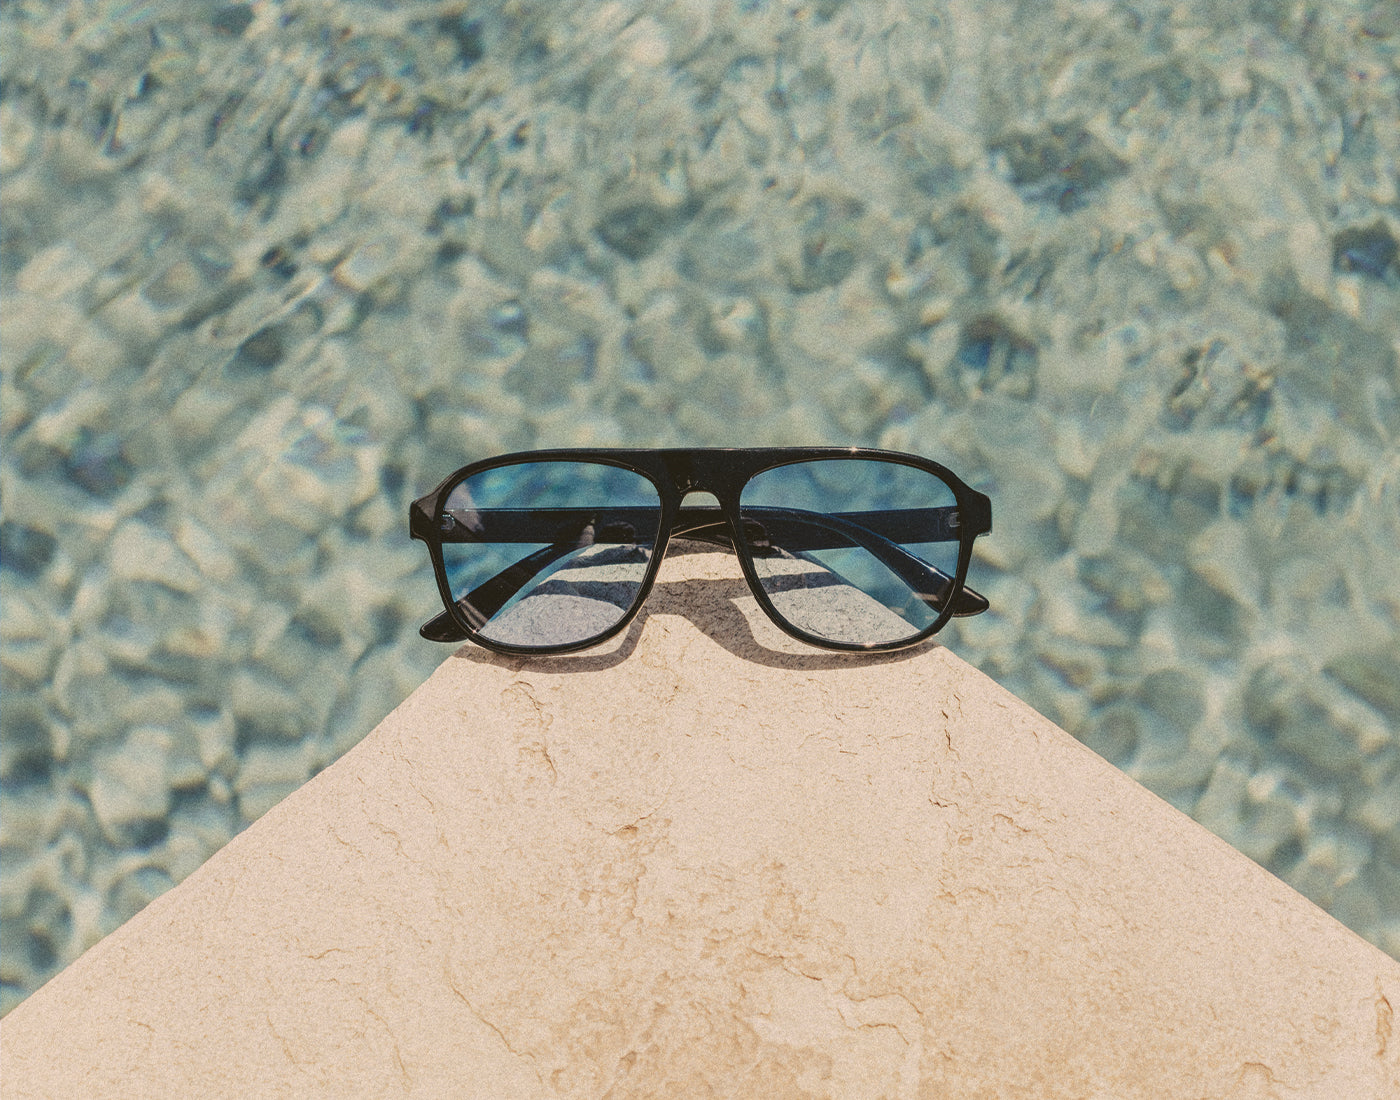 sunski shoreline sunglasses on a pool ledge